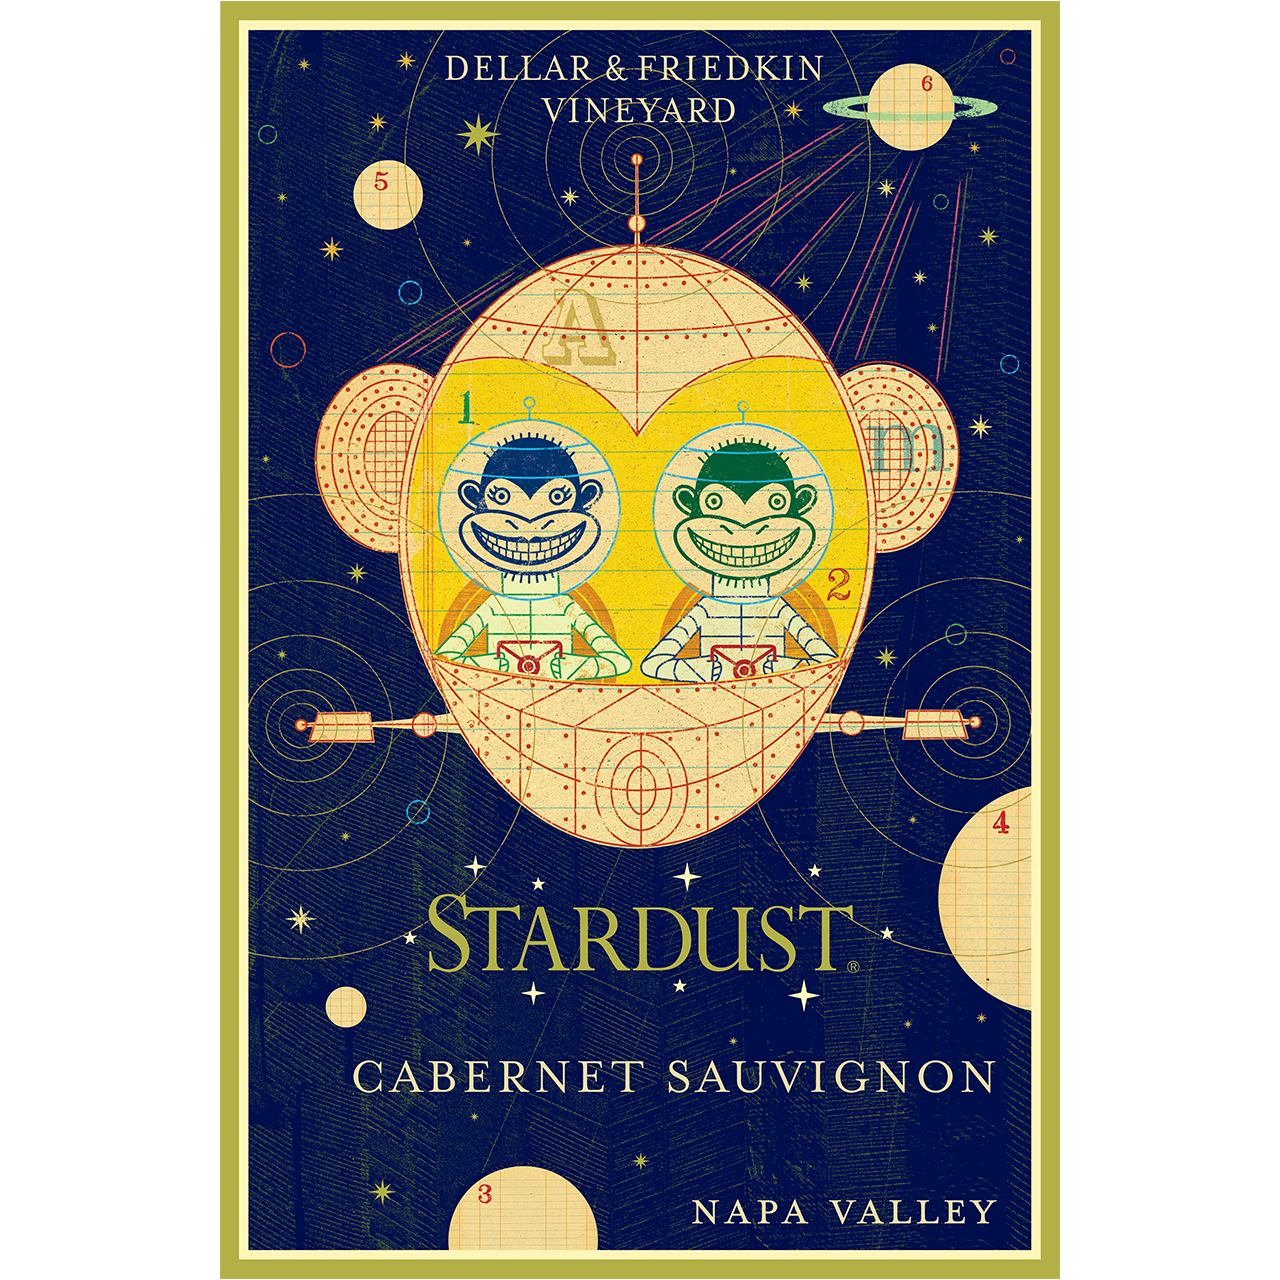 Stardust wine label